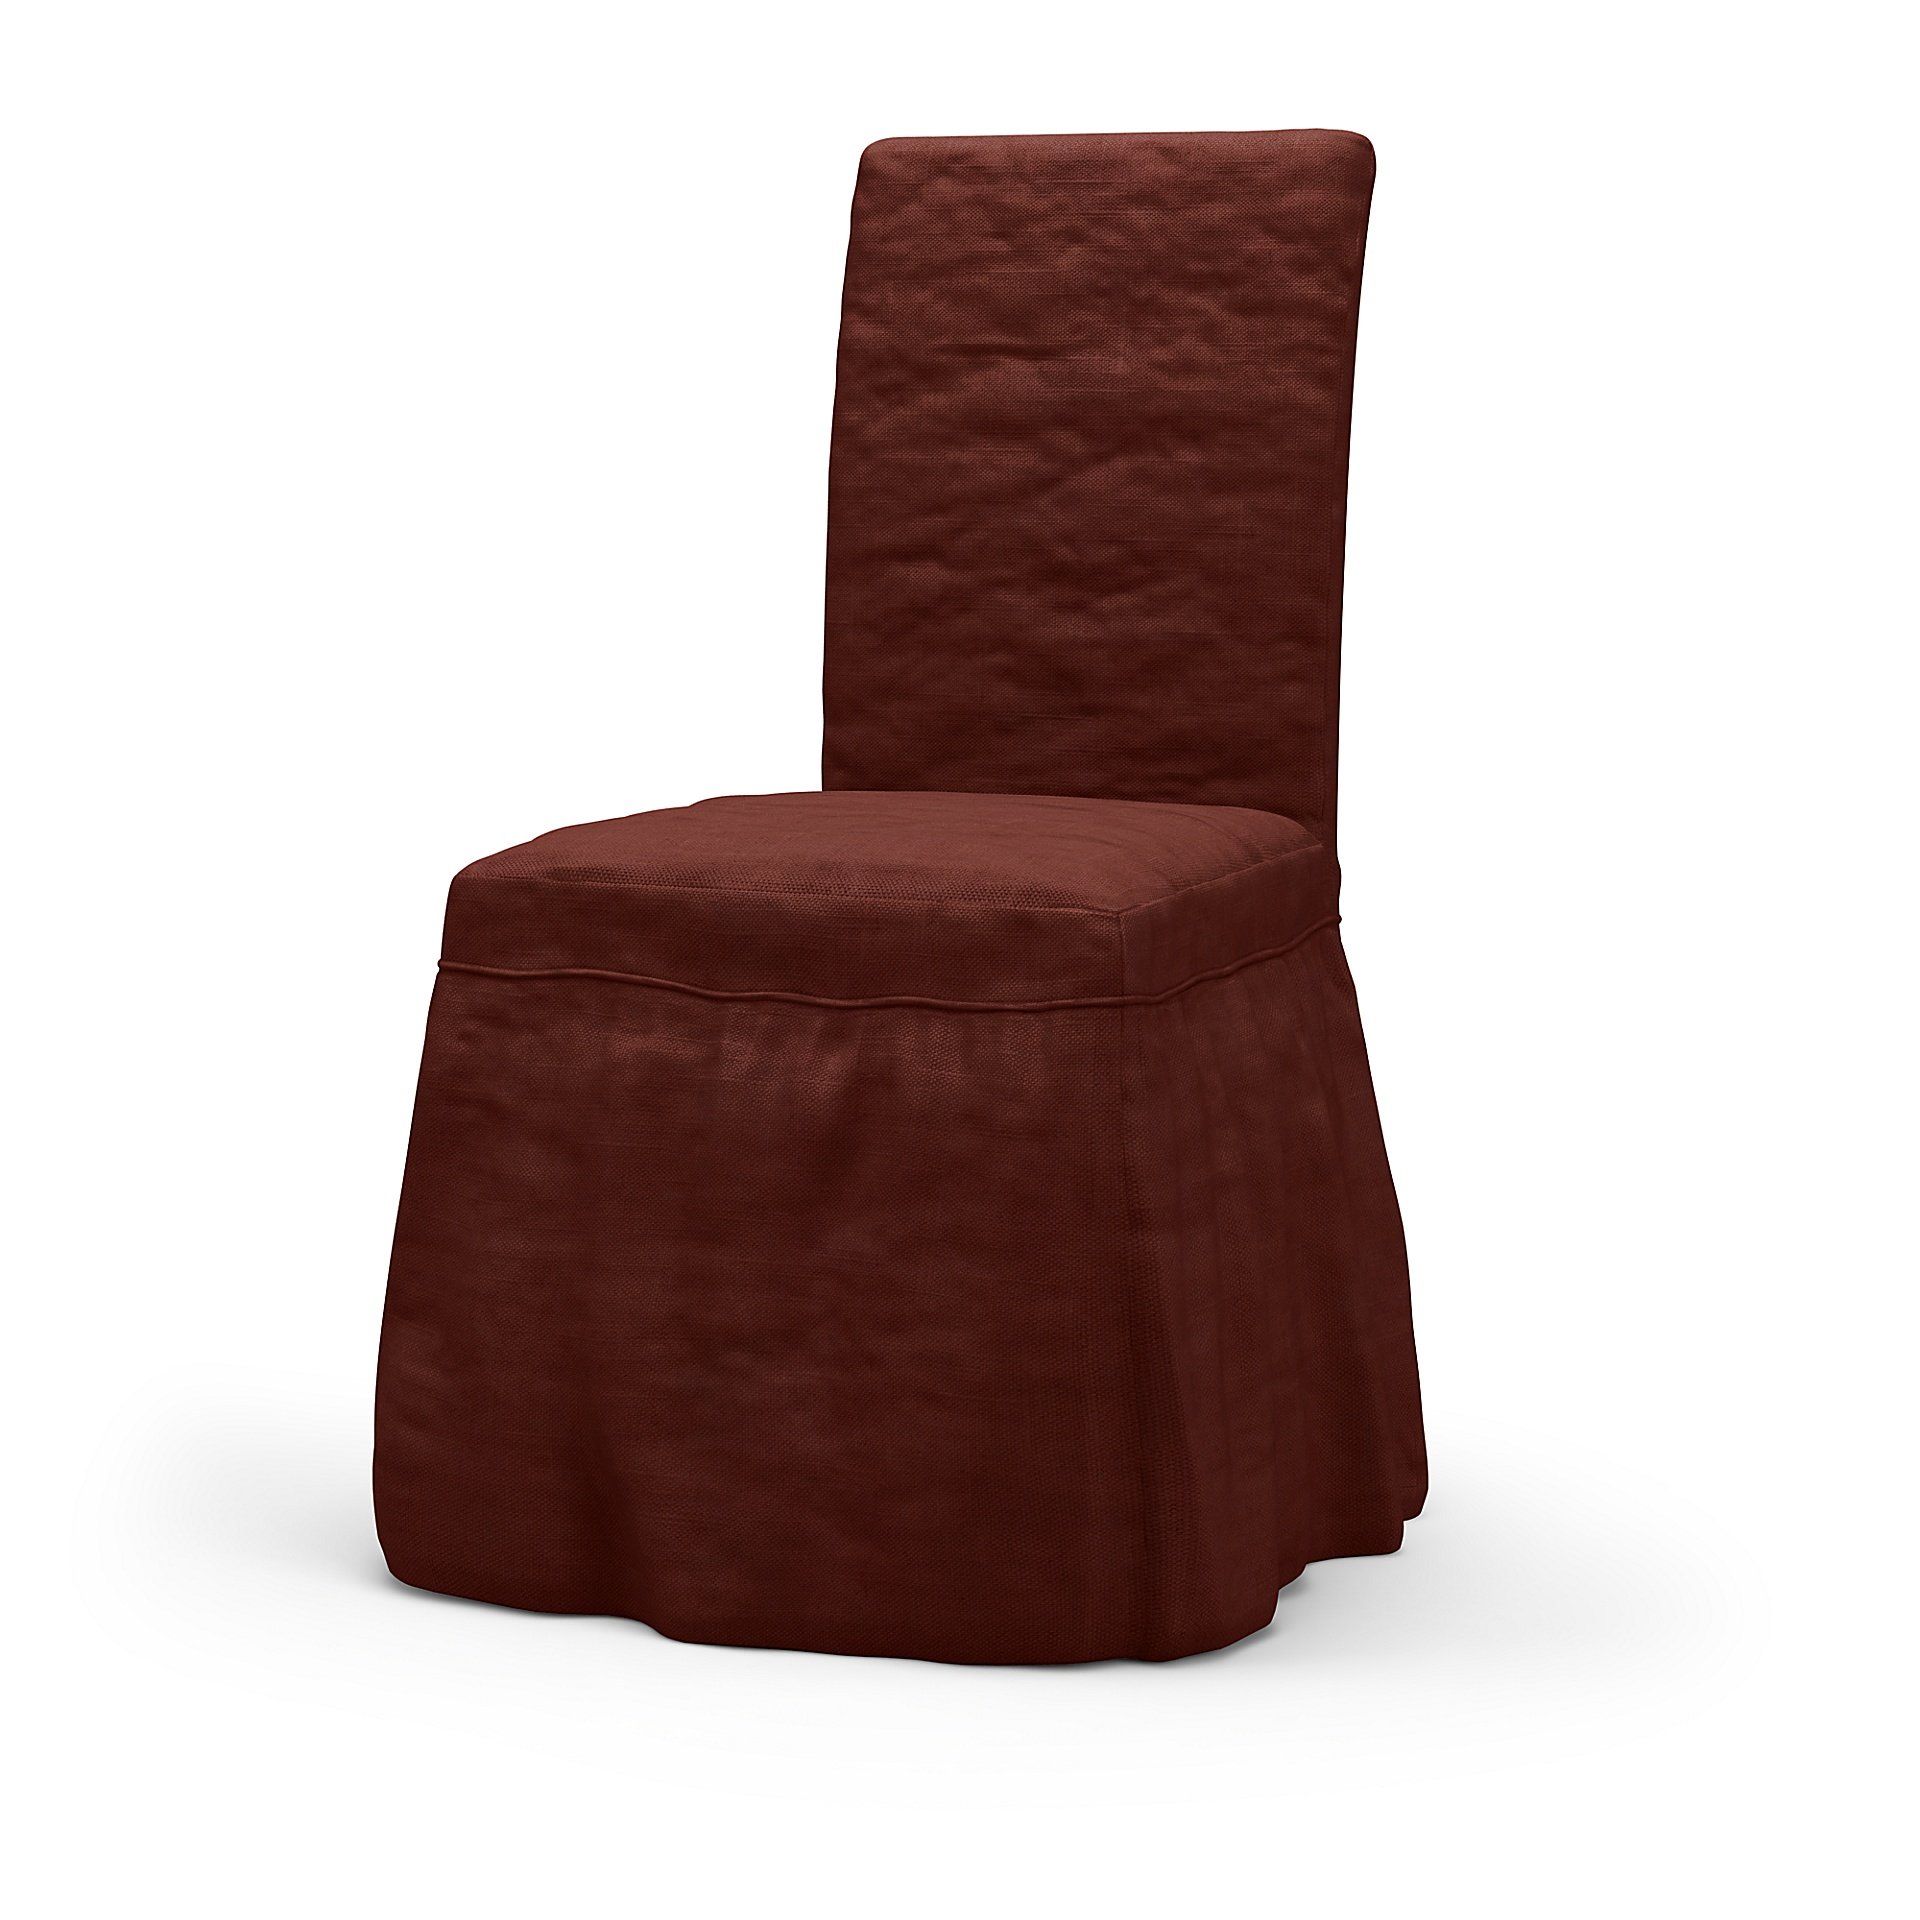 IKEA - Henriksdal Dining Chair Cover Long skirt with Ruffles (Standard model), Ground Coffee, Velvet